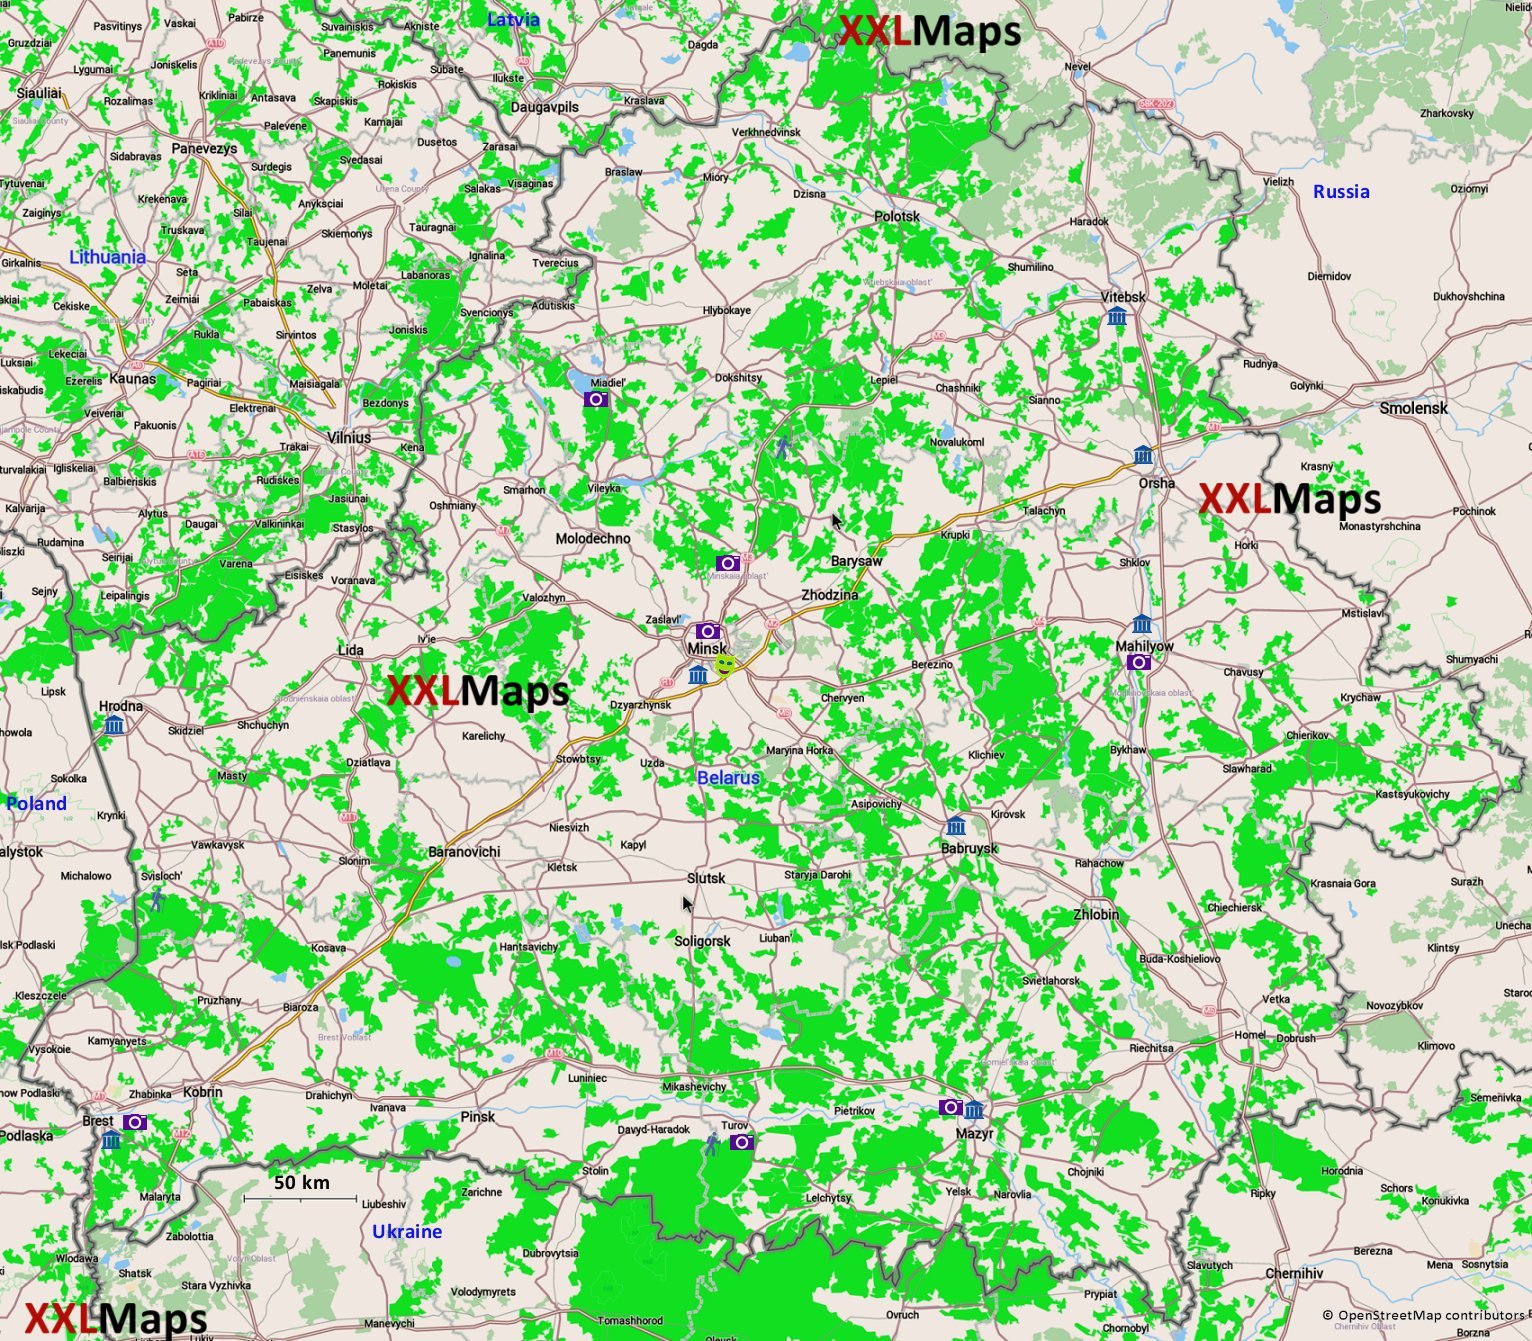 Turist kart over Hviterussland